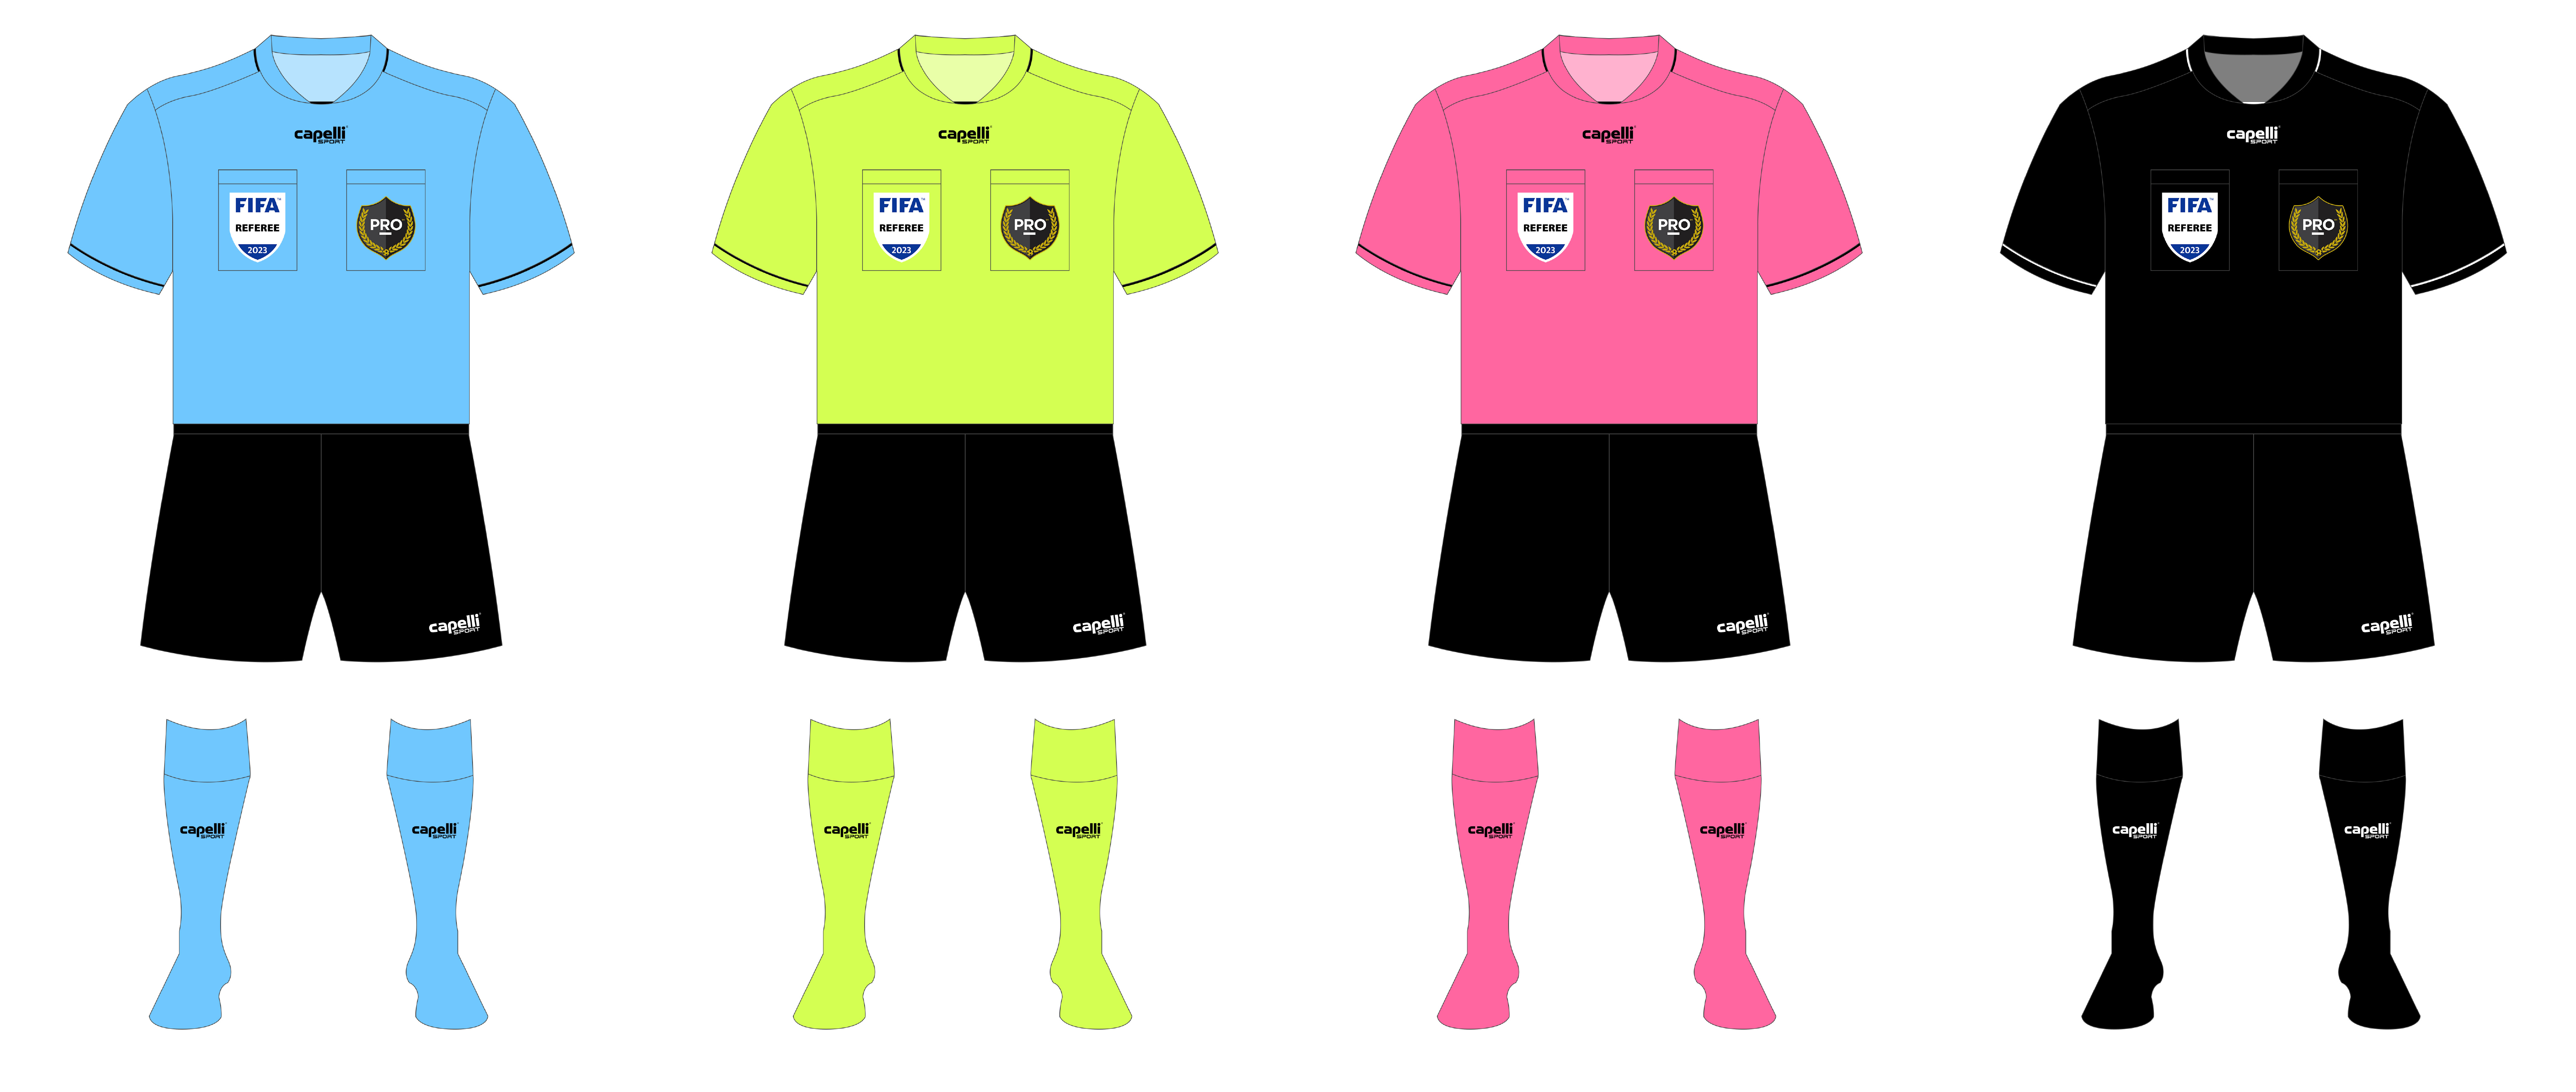 kit jersey pro league soccer